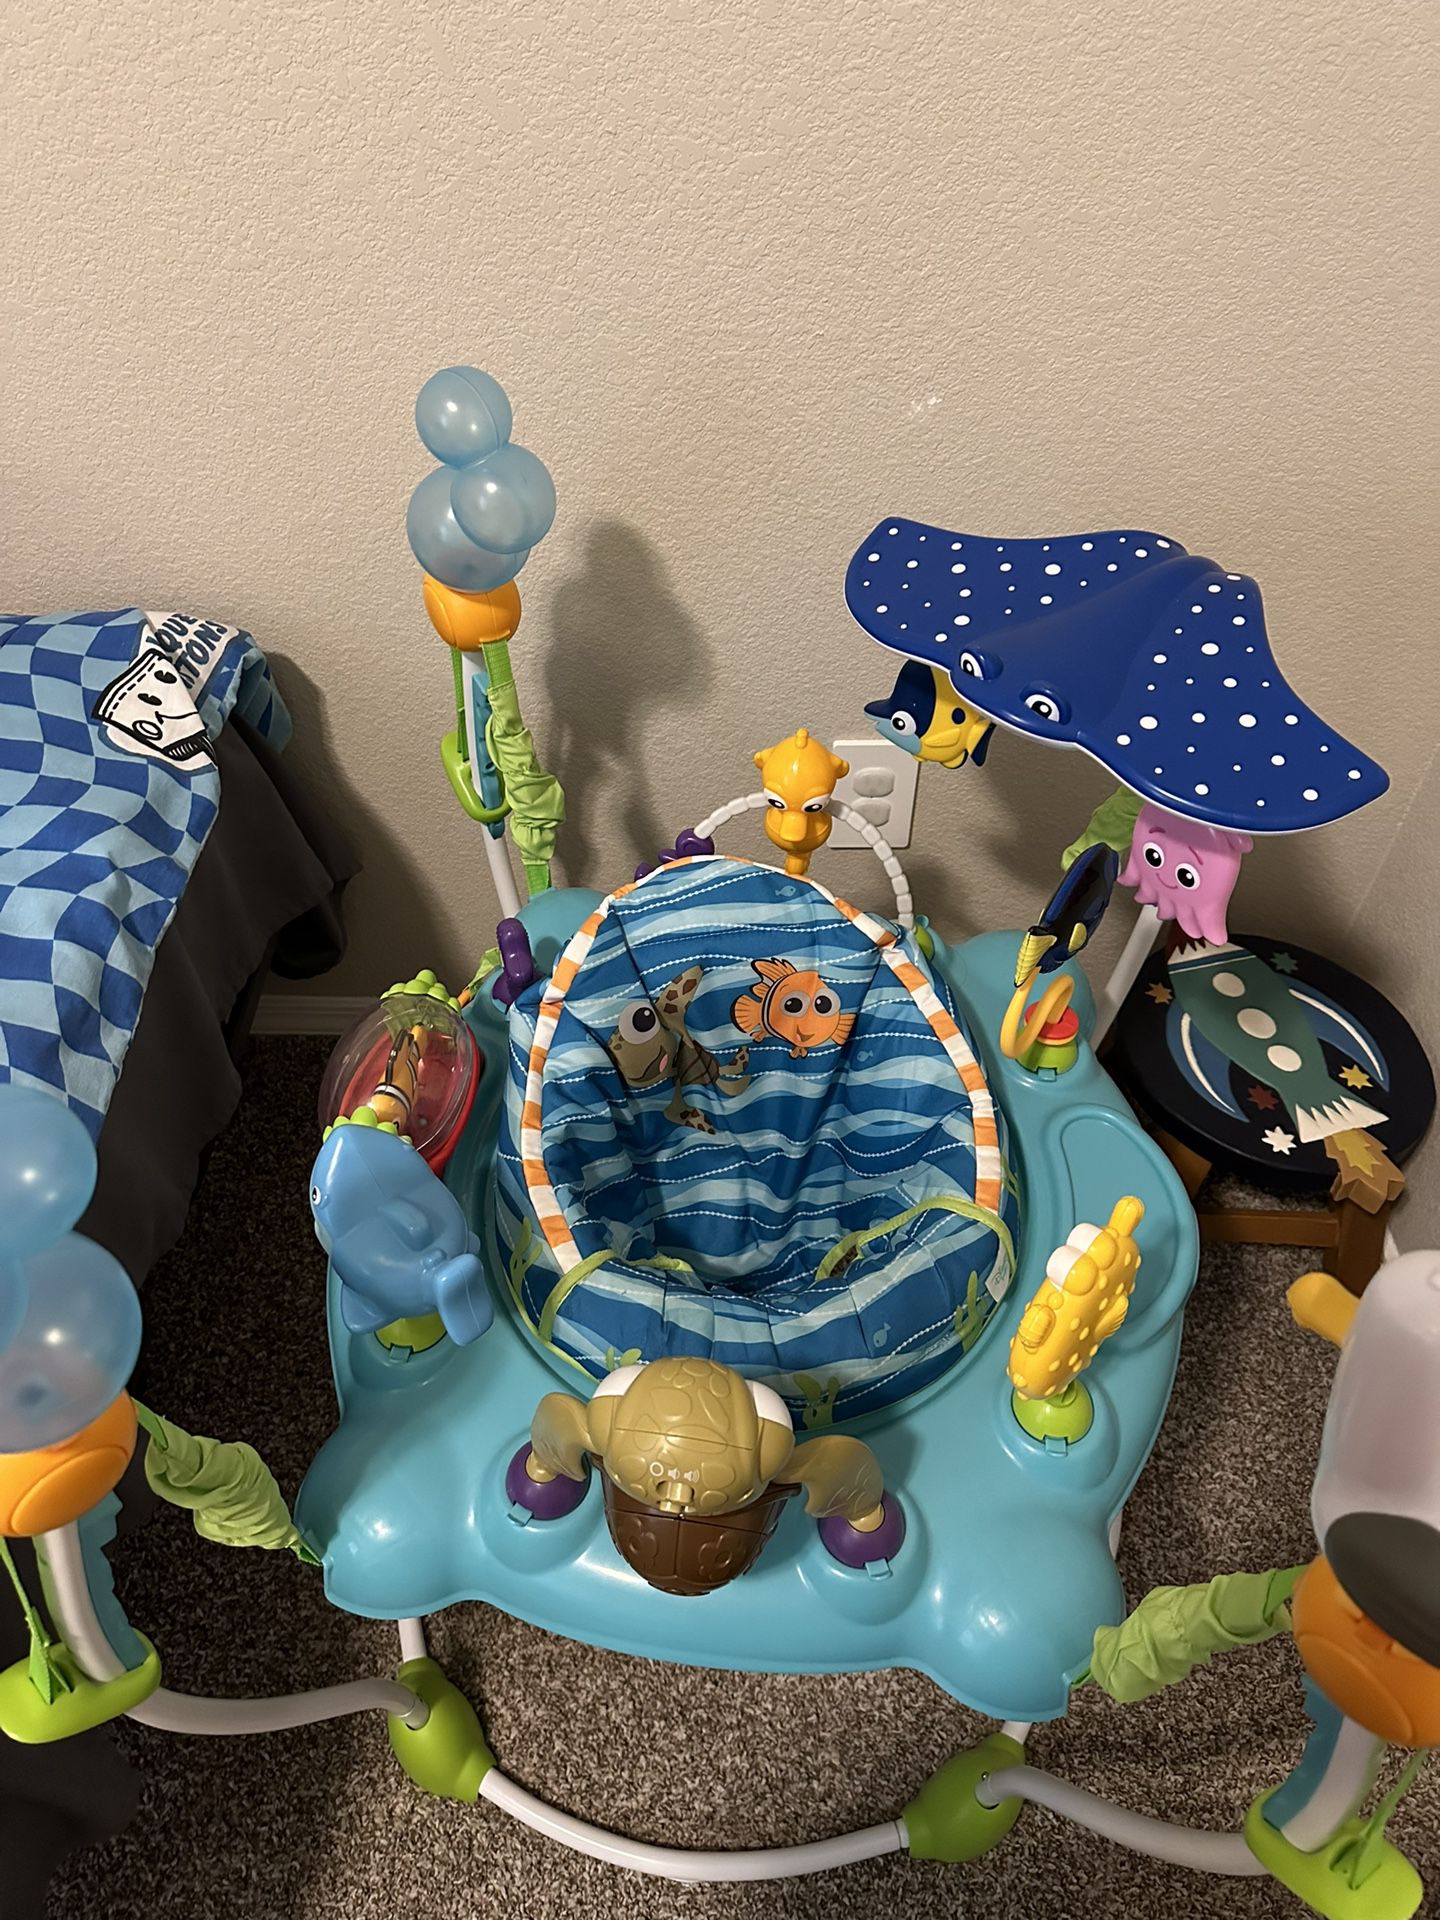 Nemo activity jumper